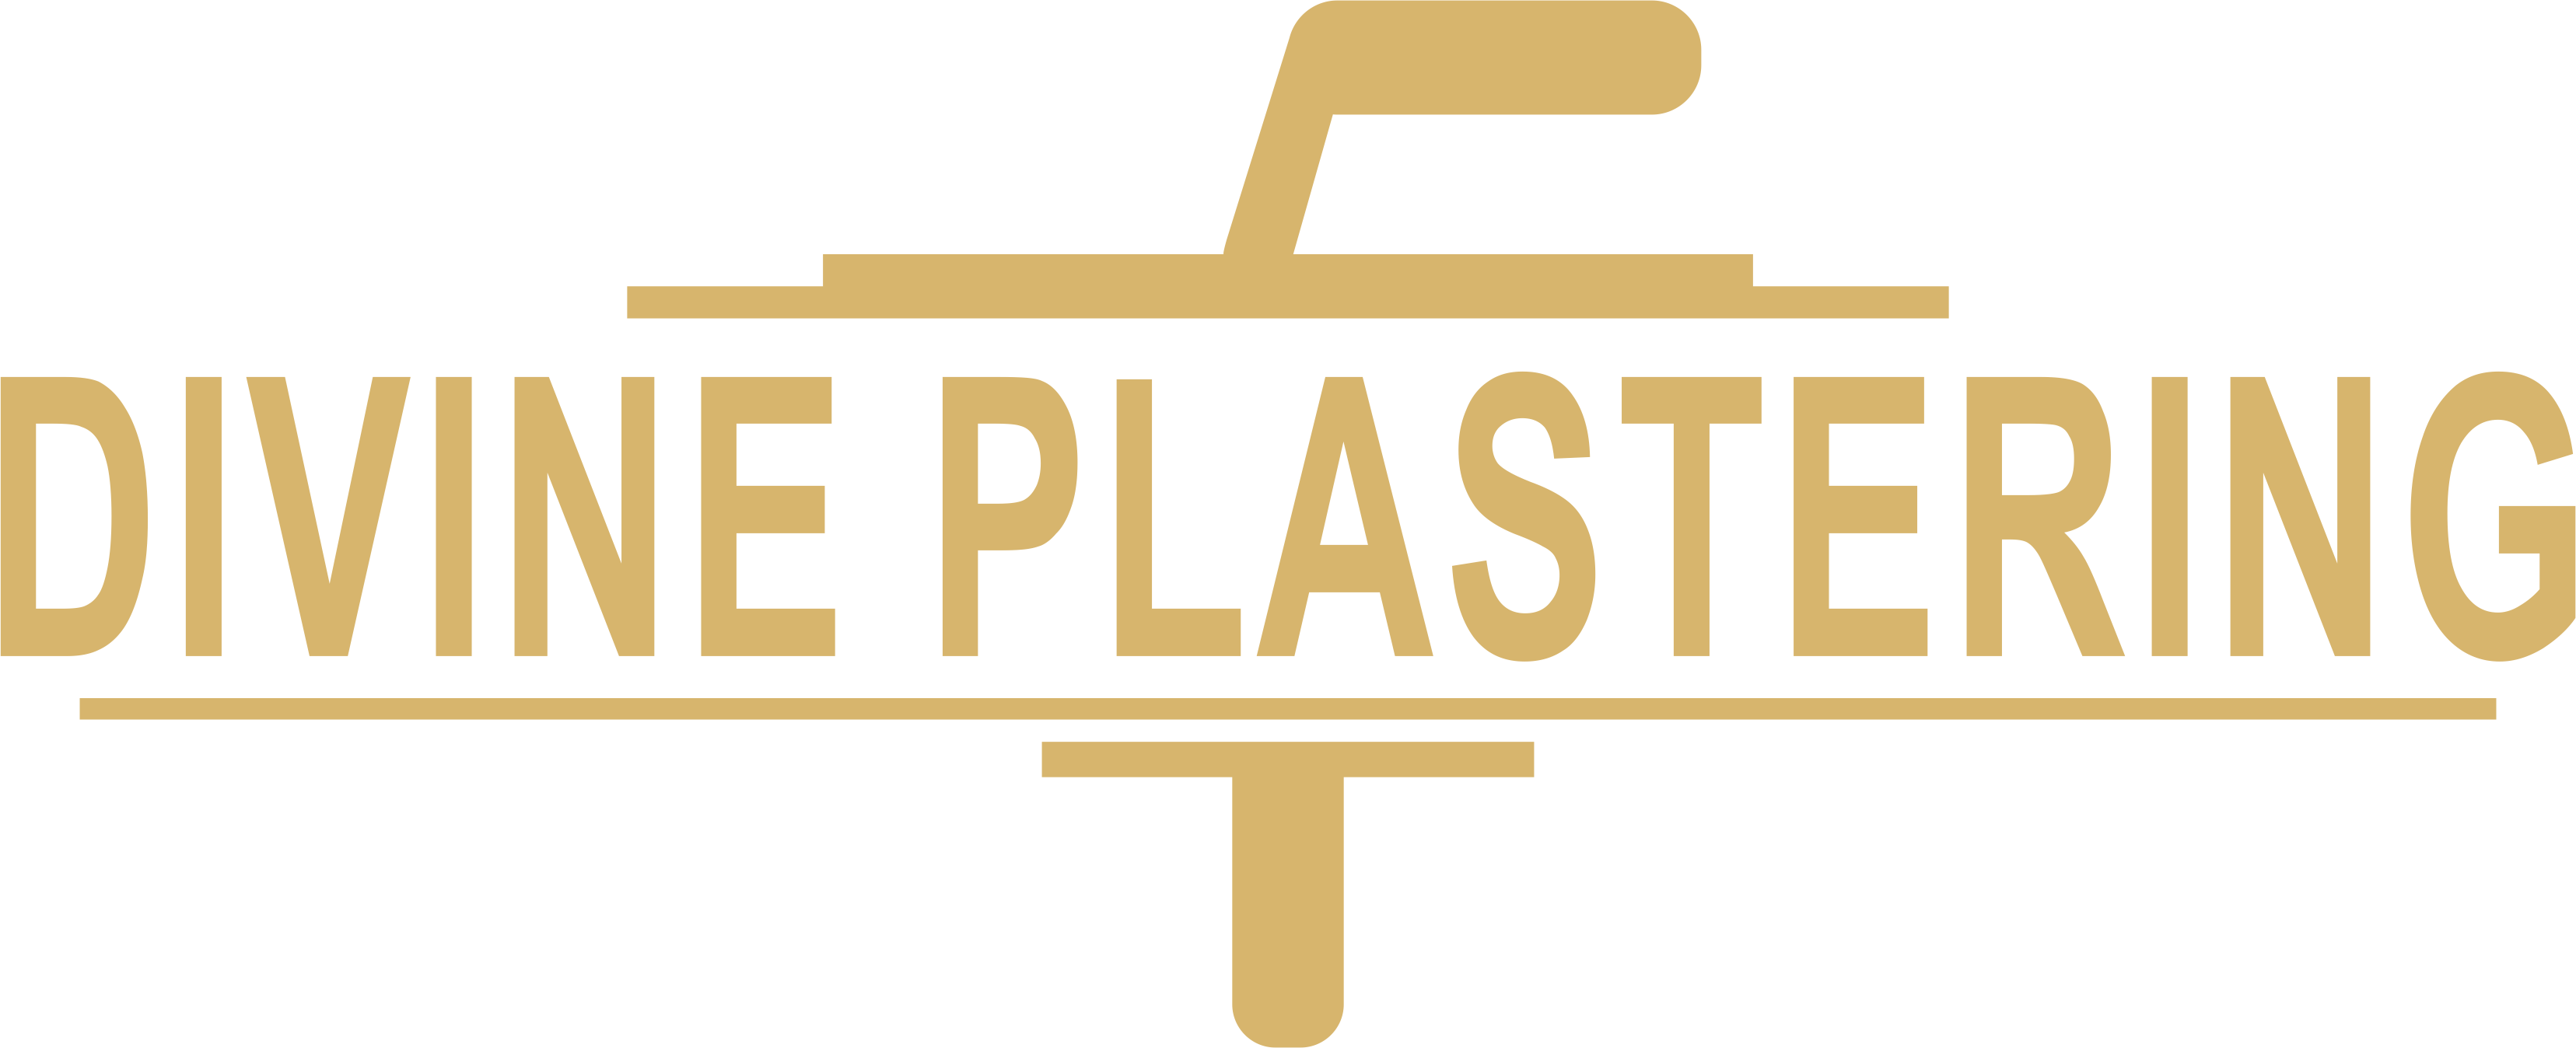 Divine-Plastering-Logo